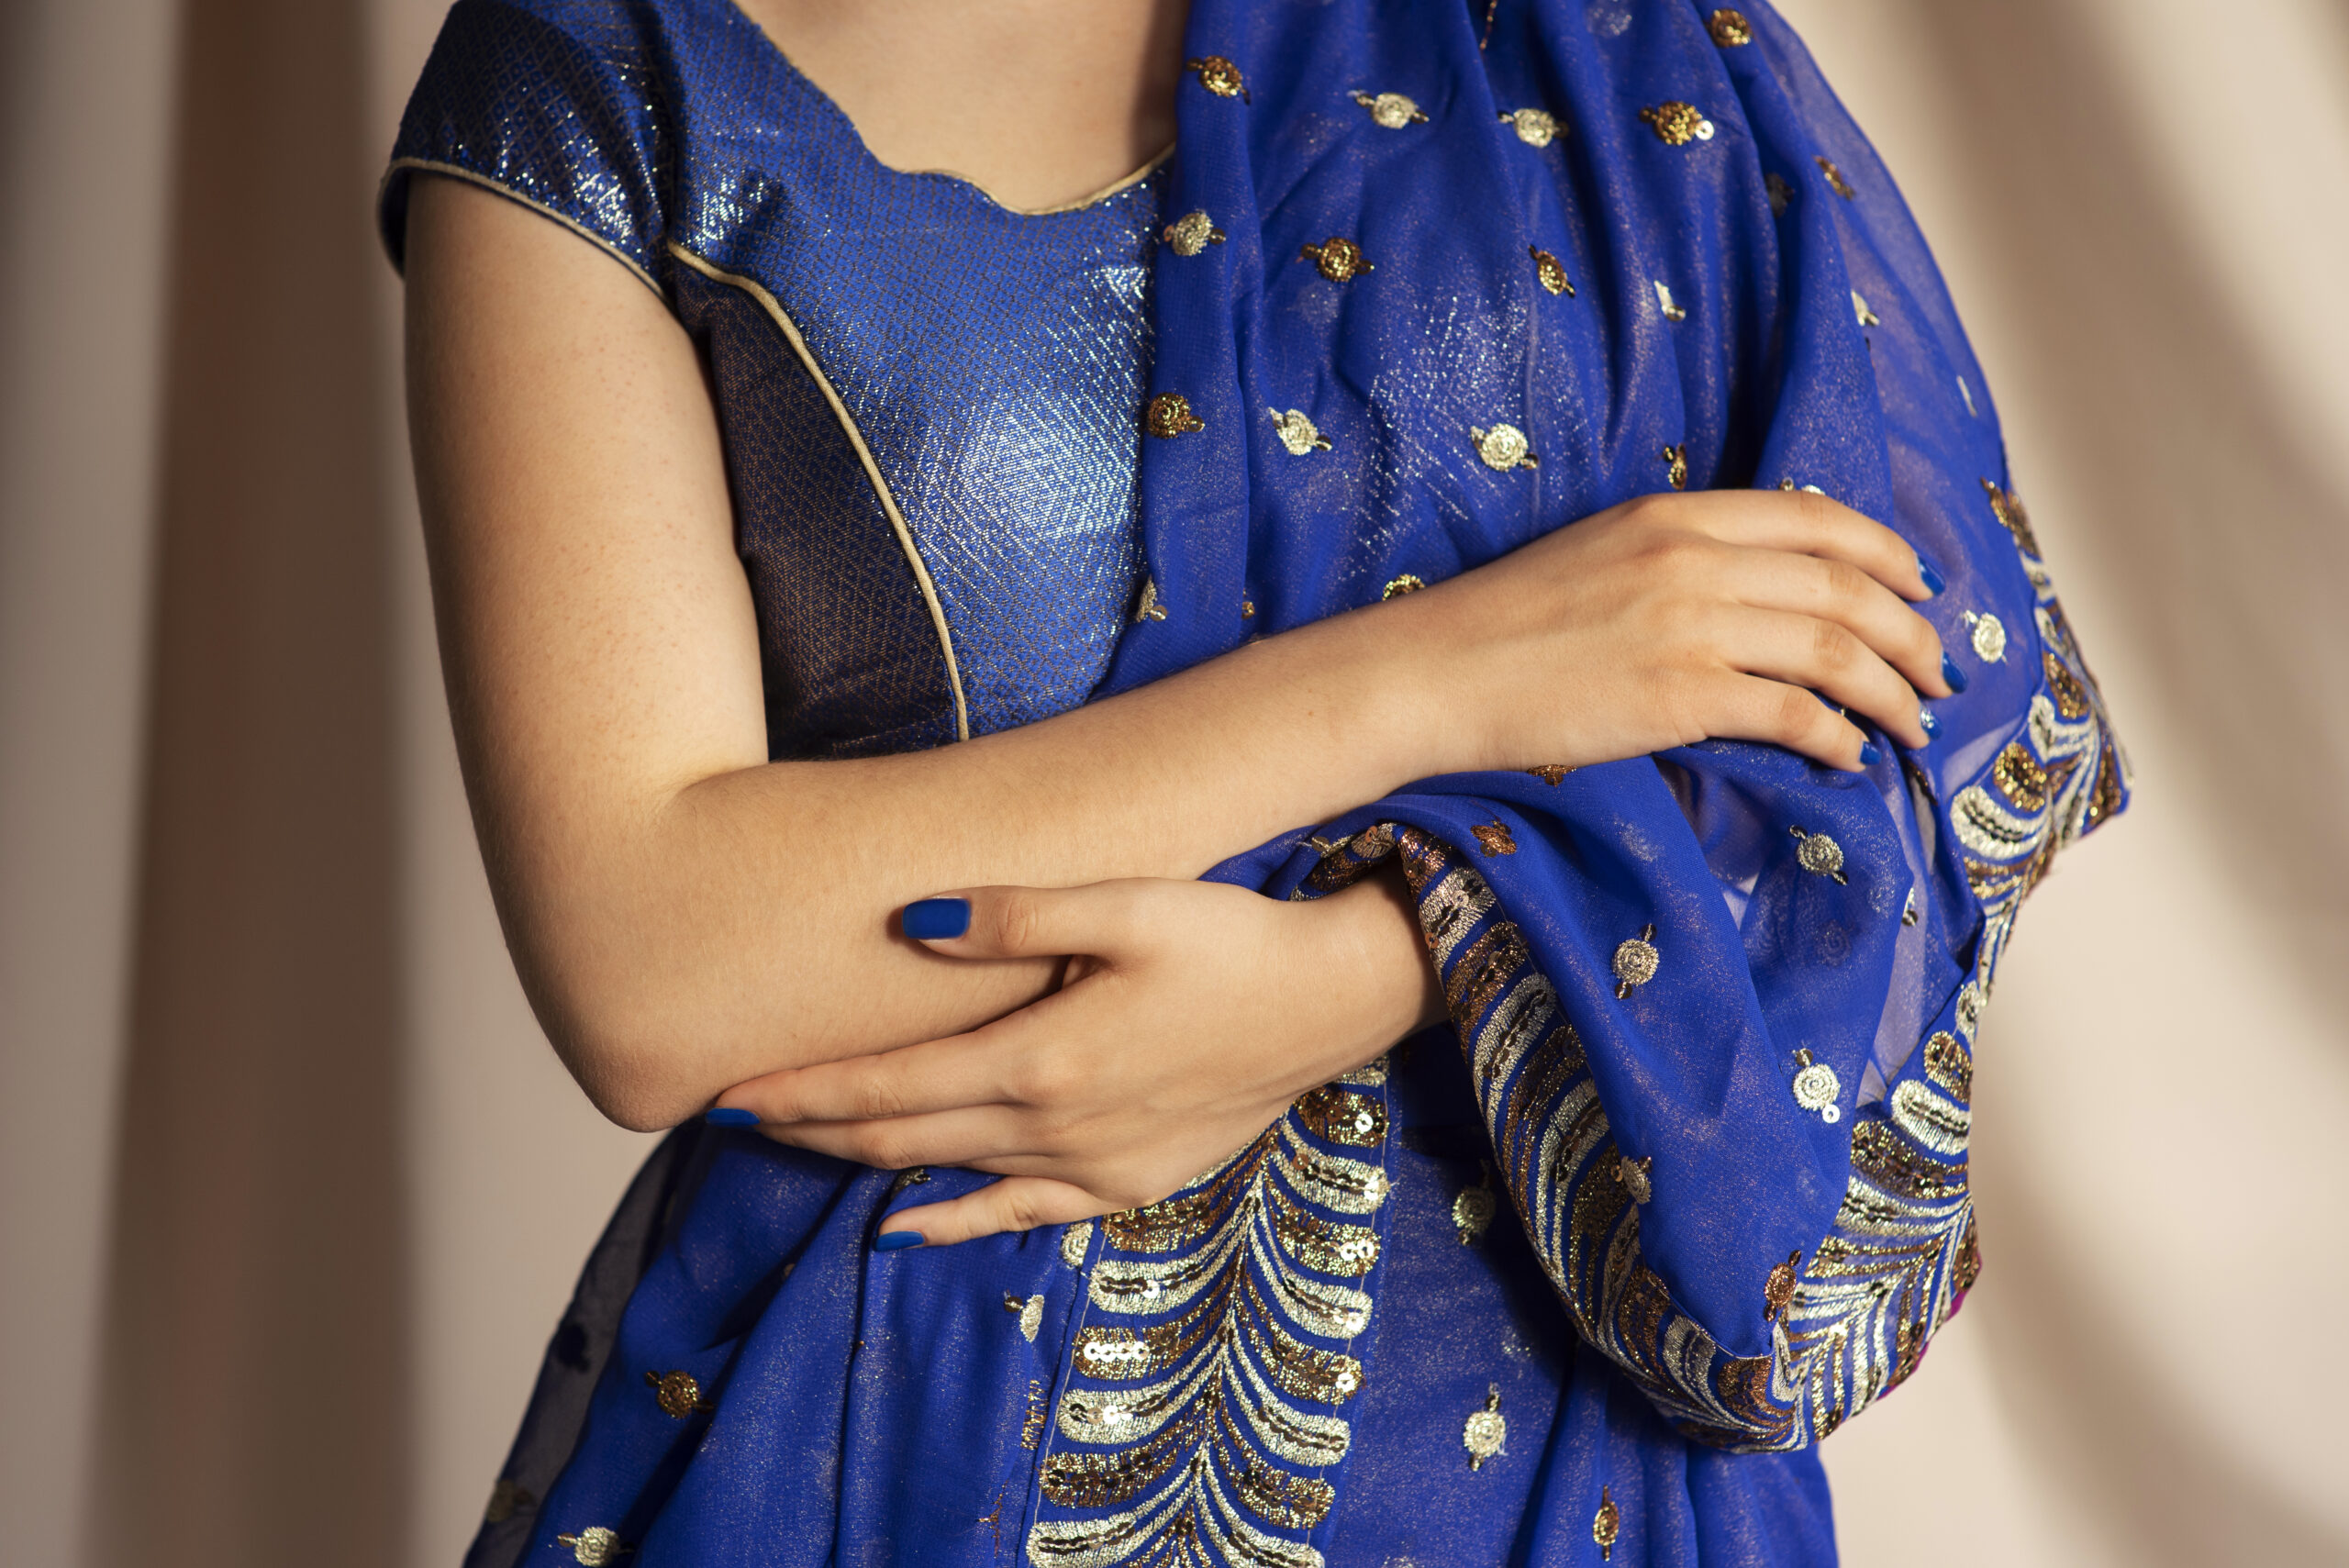 close-up-hands-woman-wearing-traditional-sari-garment